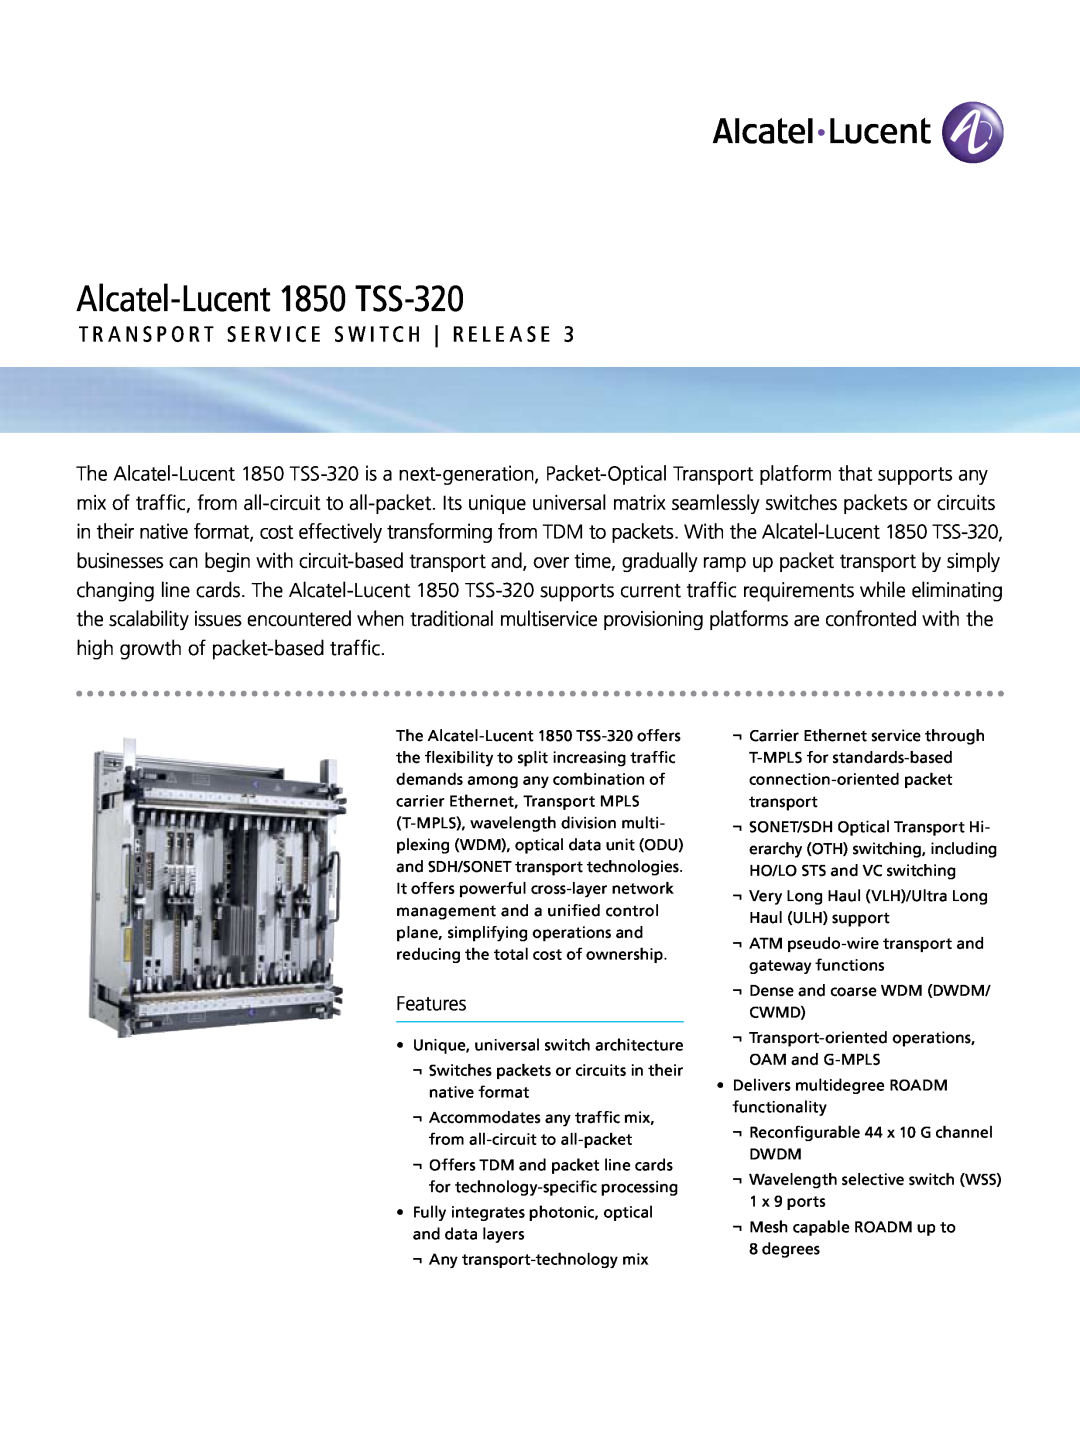 Alcatel-Lucent manual Alcatel-Lucent 1850 TSS-320, T r a n s p o r t S e r v i c e S w i t c h R e l e a s e 